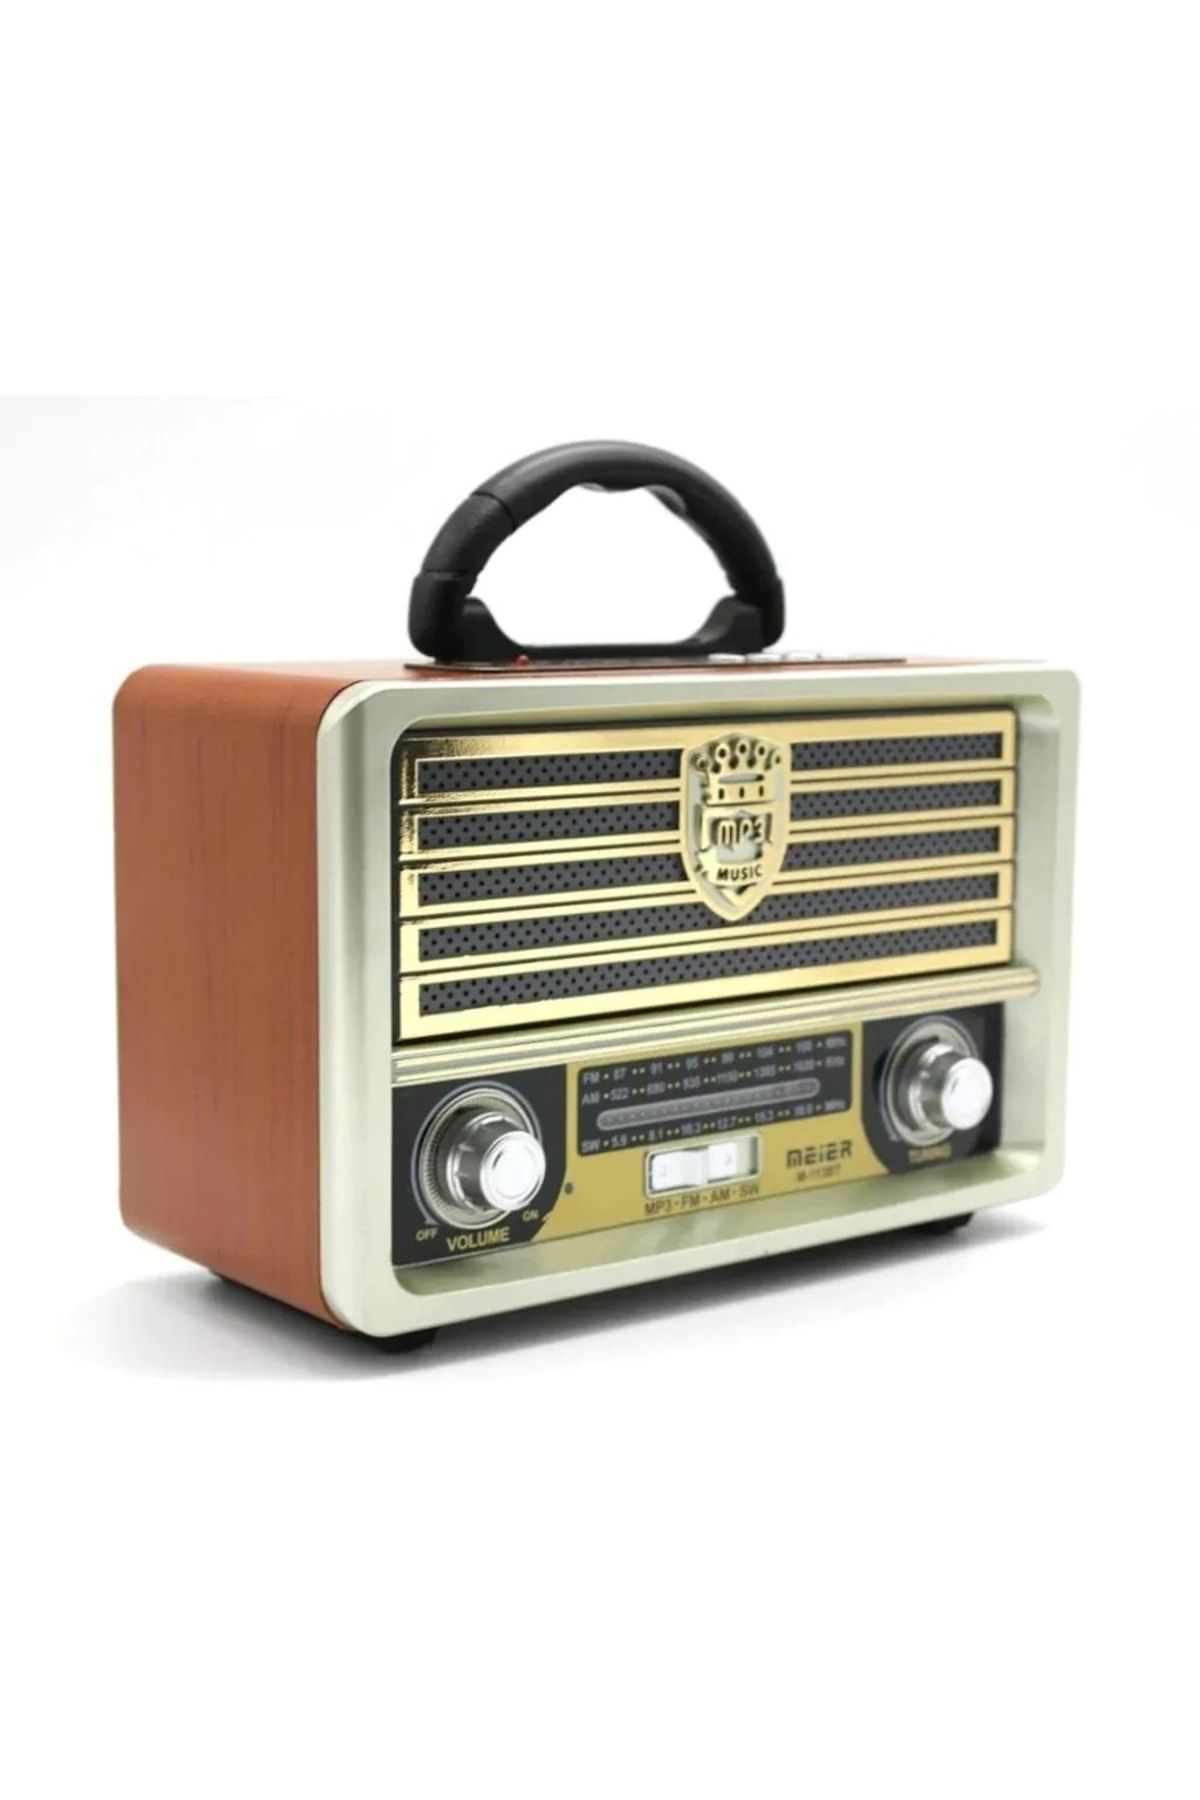 Tastech Meier M-113bt Açık Gold Renk Nostaljik Radyo